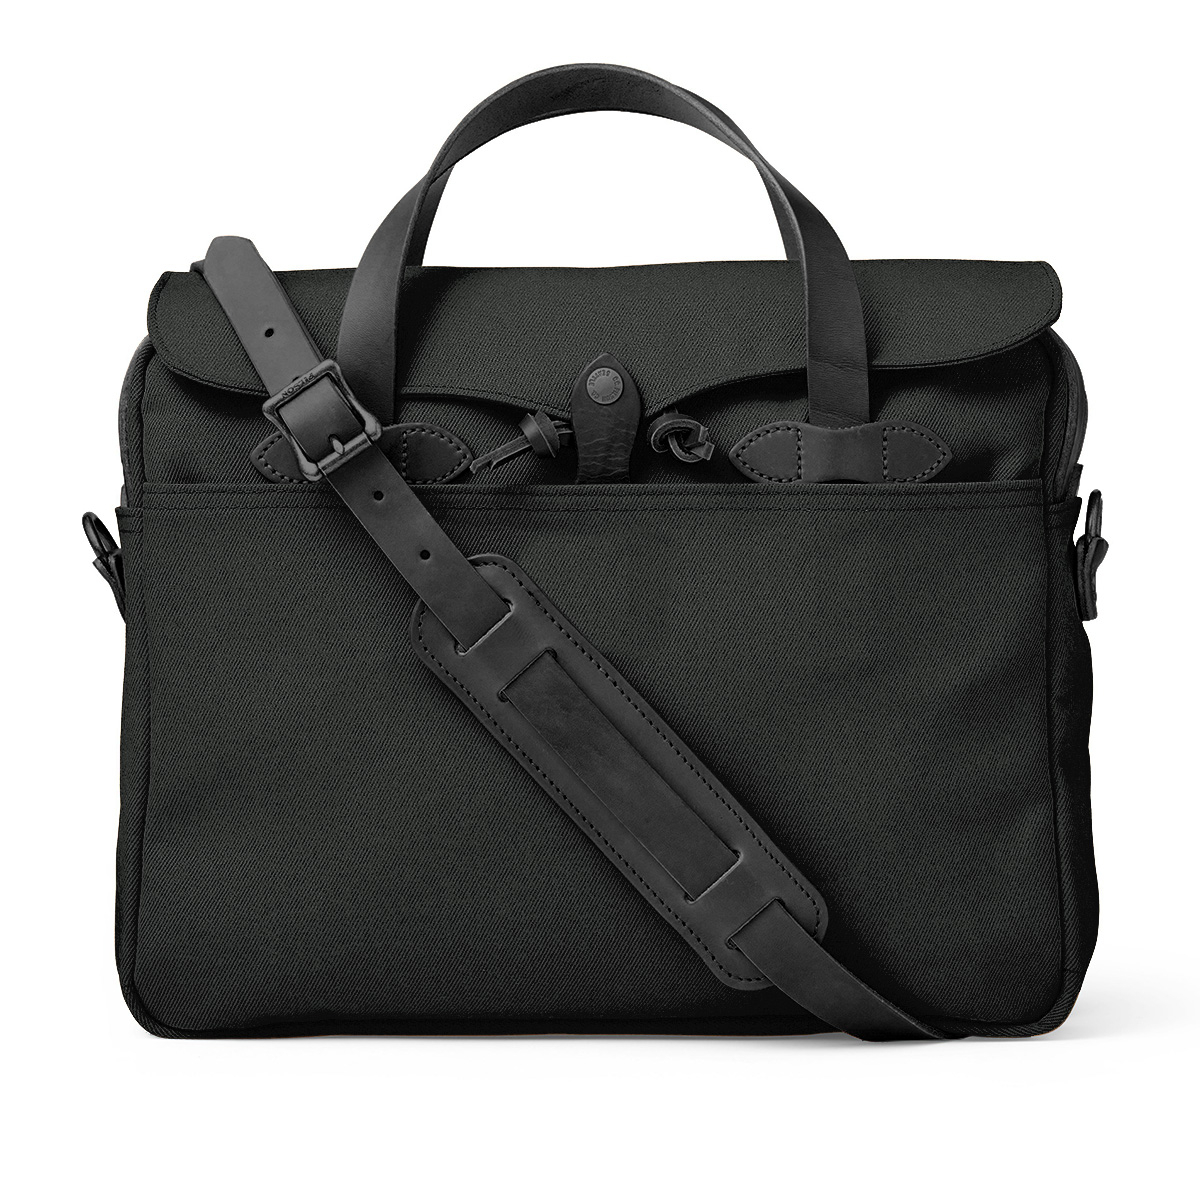 Filson Original Briefcase 11070256 Faded Black, extraordinary bag for an ordinary day